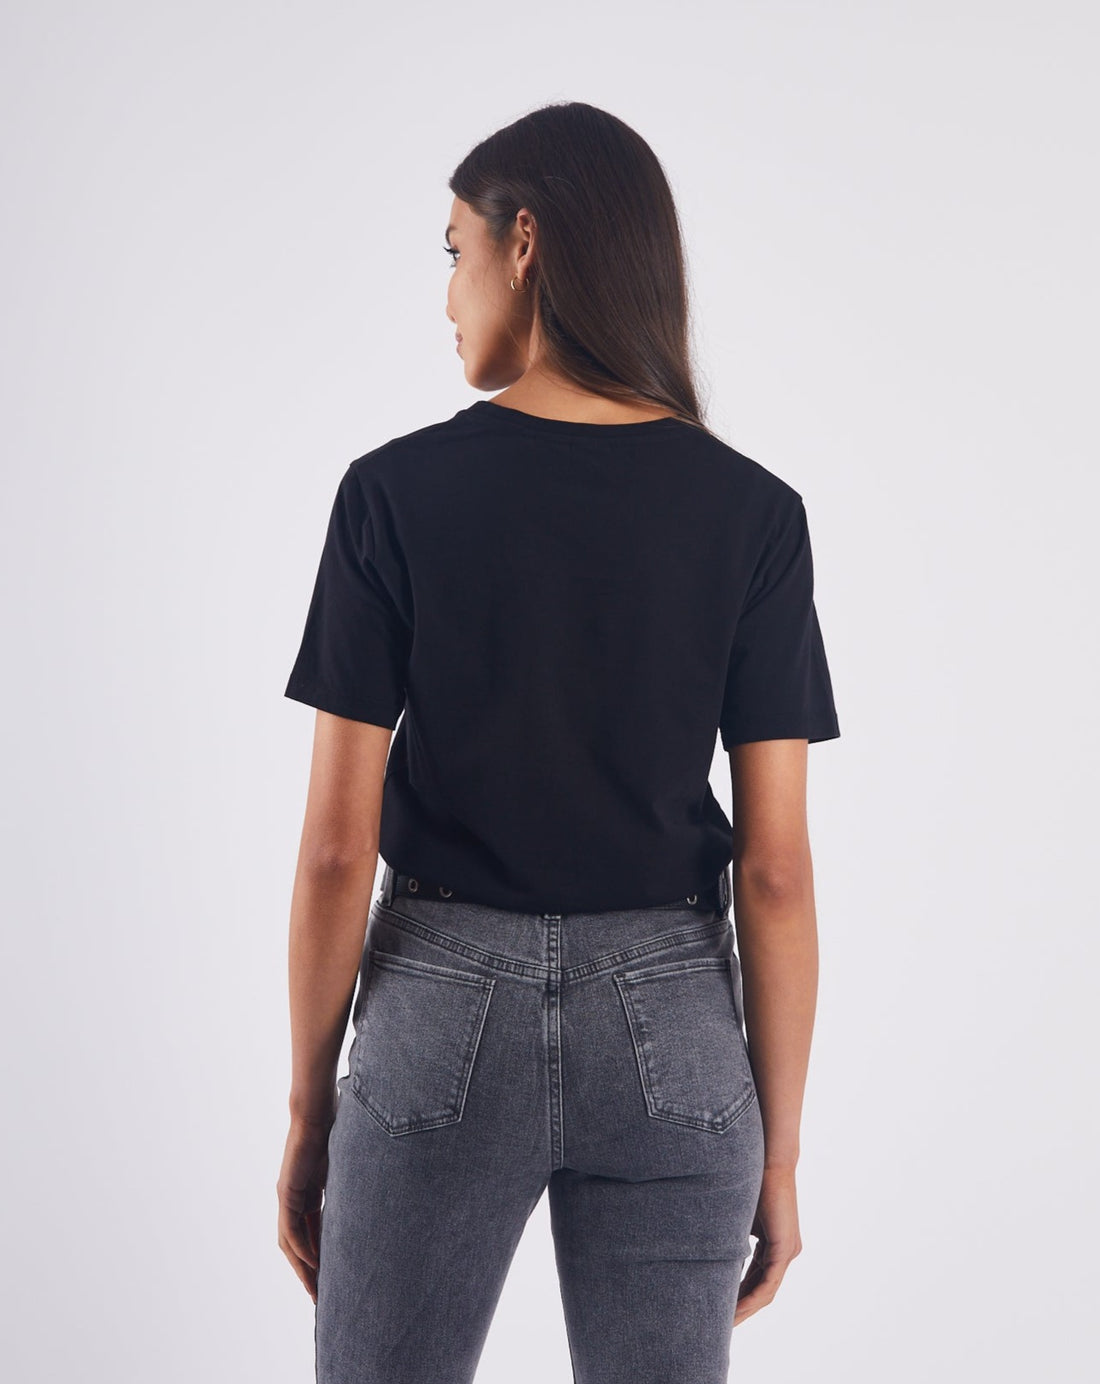 Ladies Sharon T-Shirt - Black-Back View